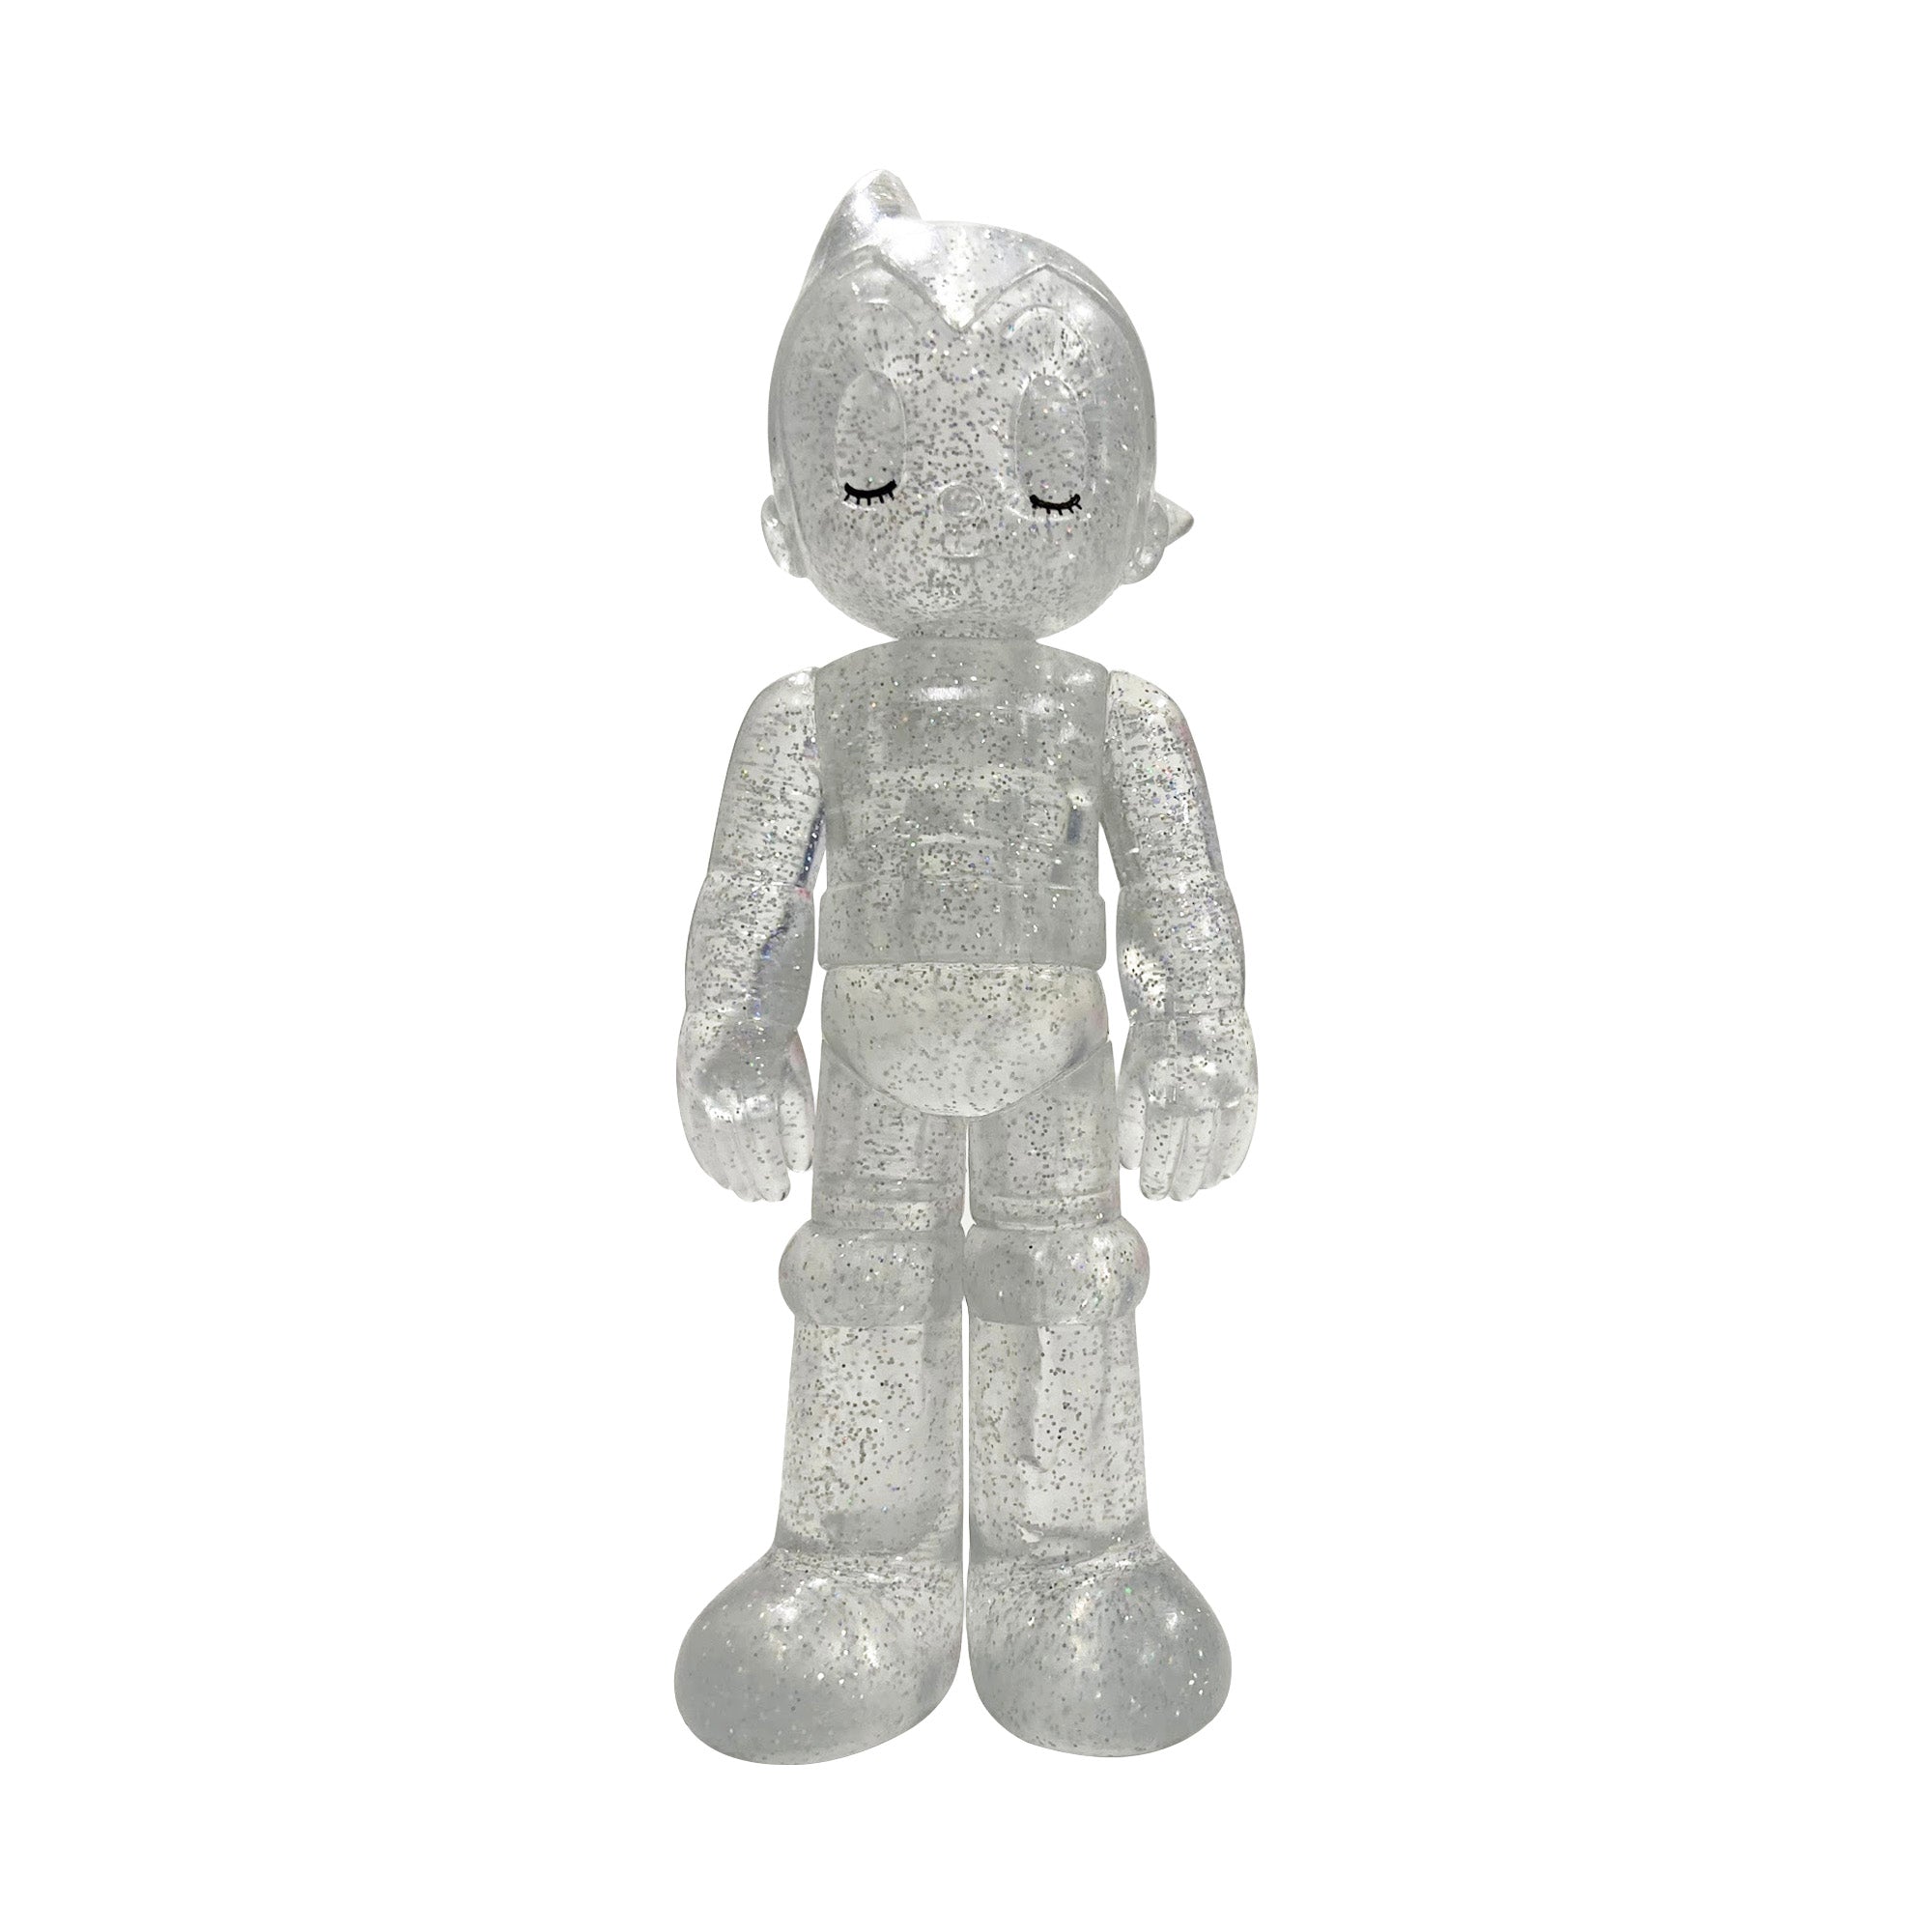 ToyQube x Tezuka Productions - Astro Boy Soda White (Closed Eyes) 5.35